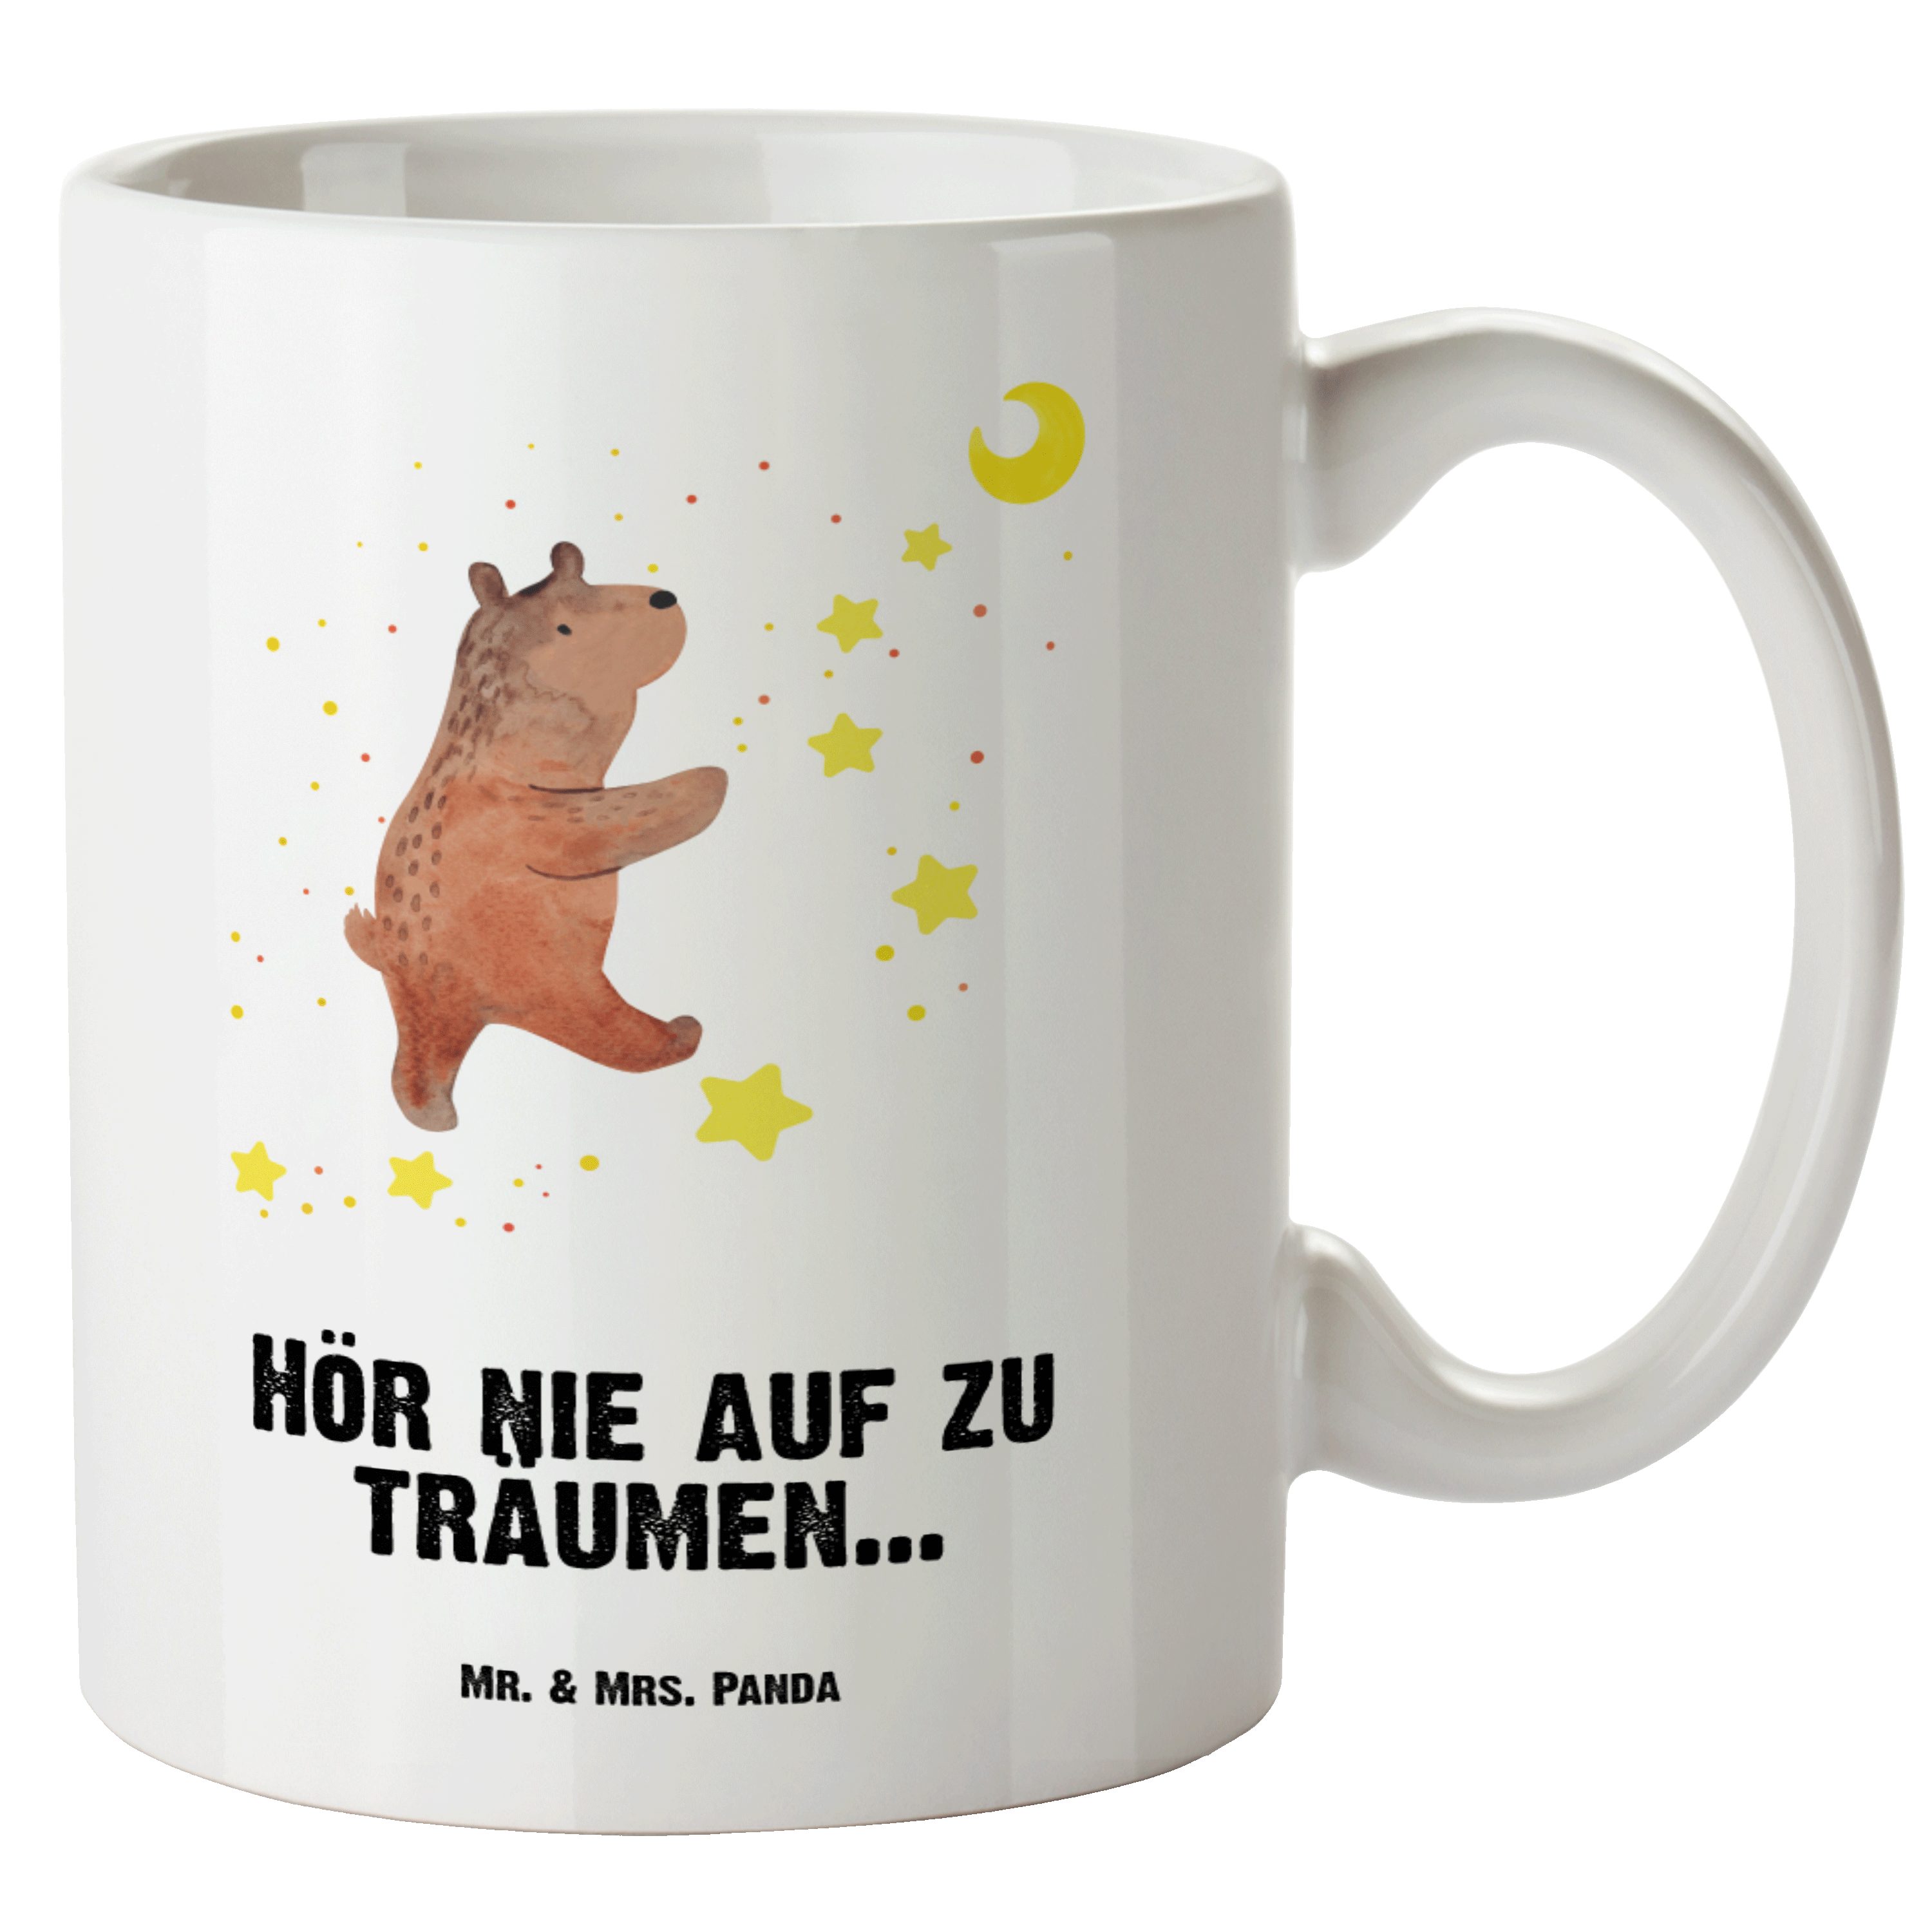 Mr. & Mrs. Panda Tasse Bär Träume - Weiß - Geschenk, Teddybär, Träumen, Grosse Kaffeetasse, XL Tasse Keramik